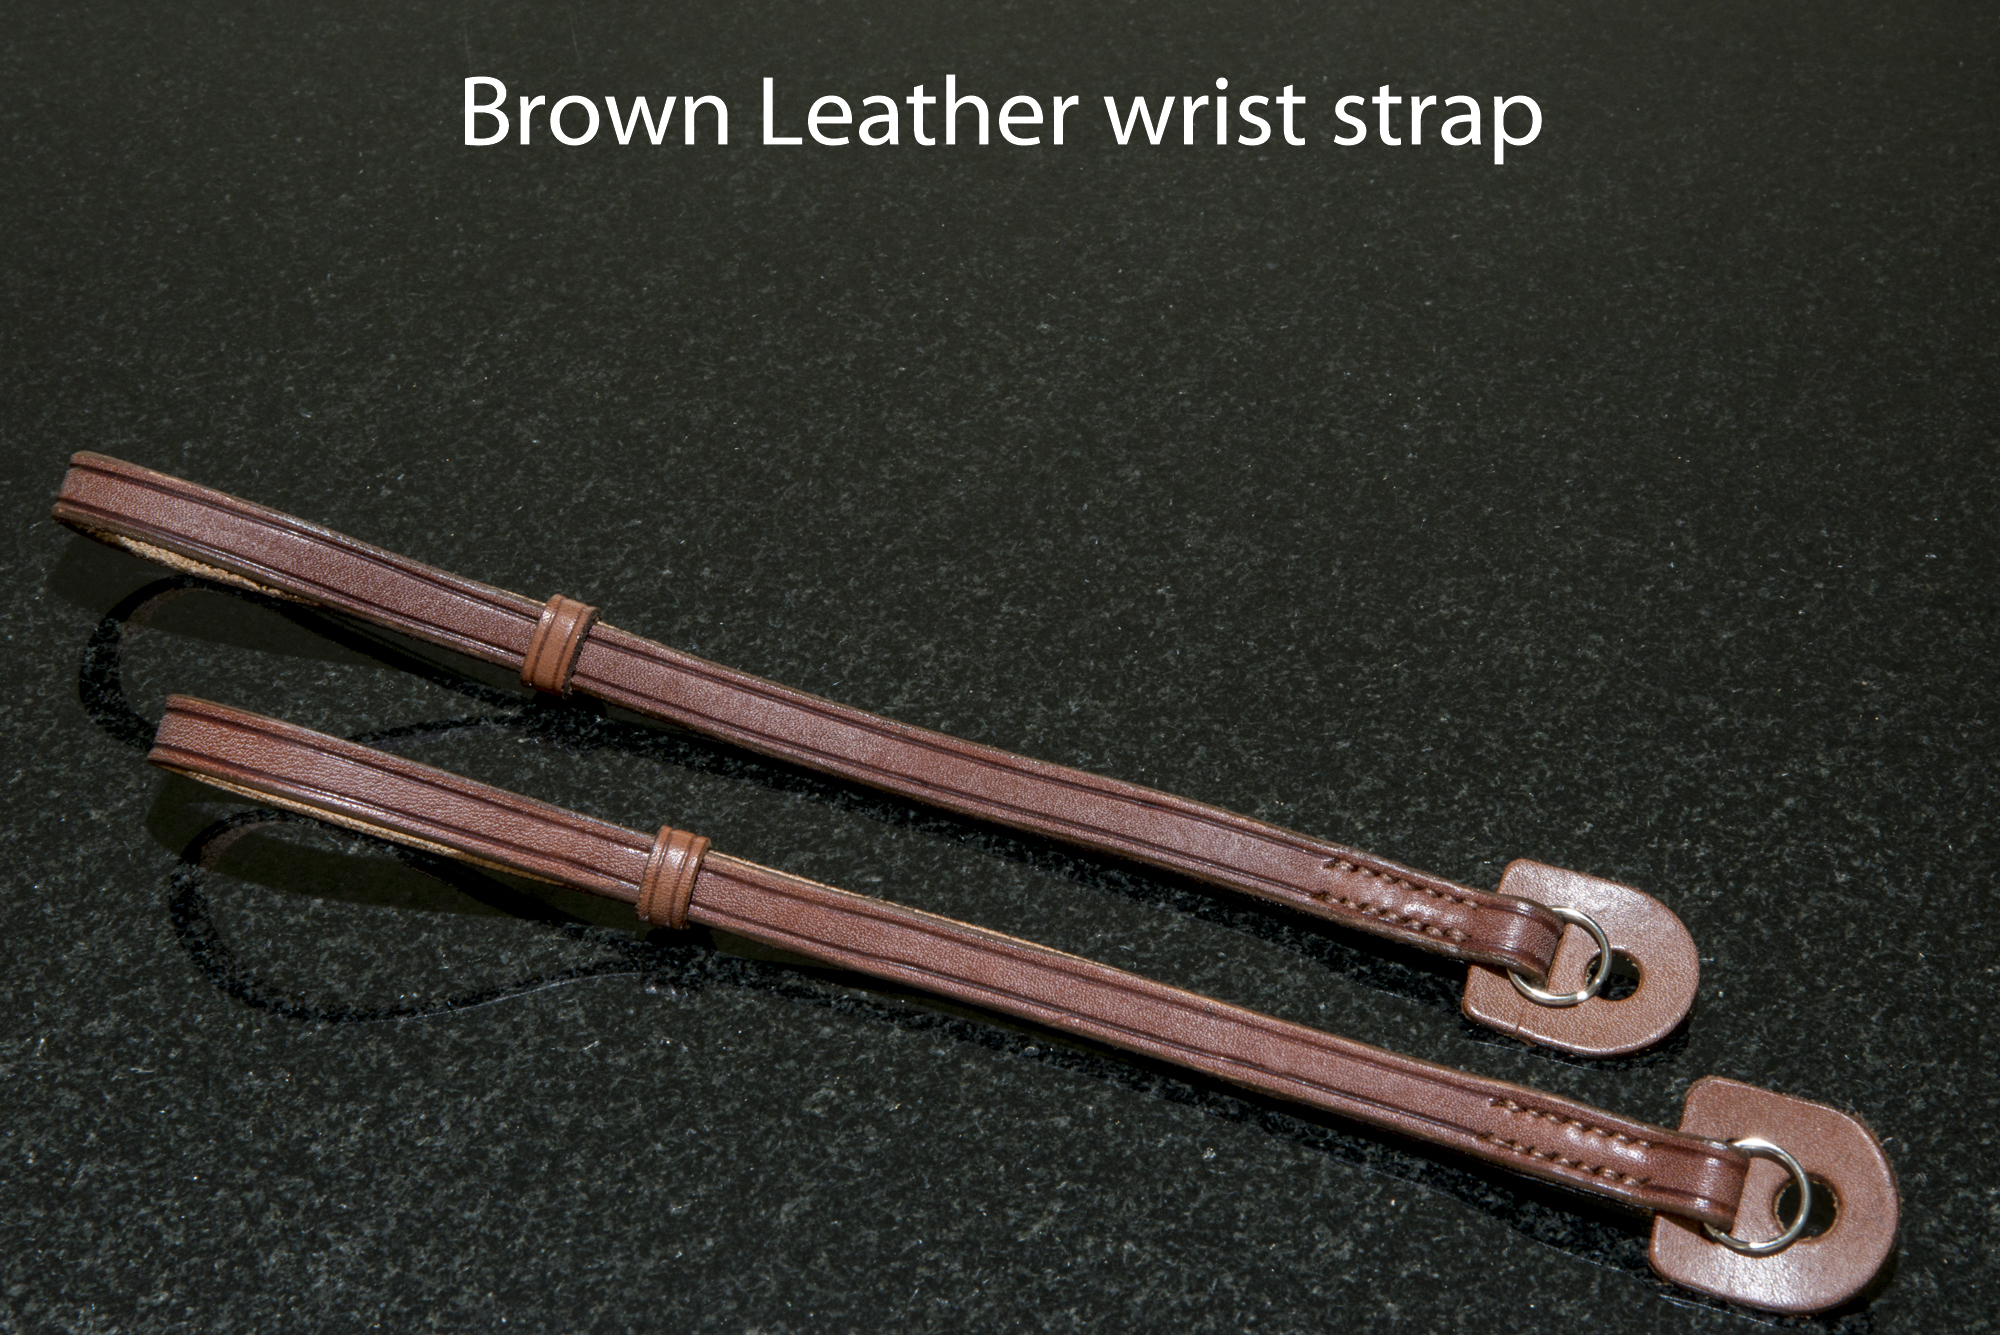 Brown leather wrist strap